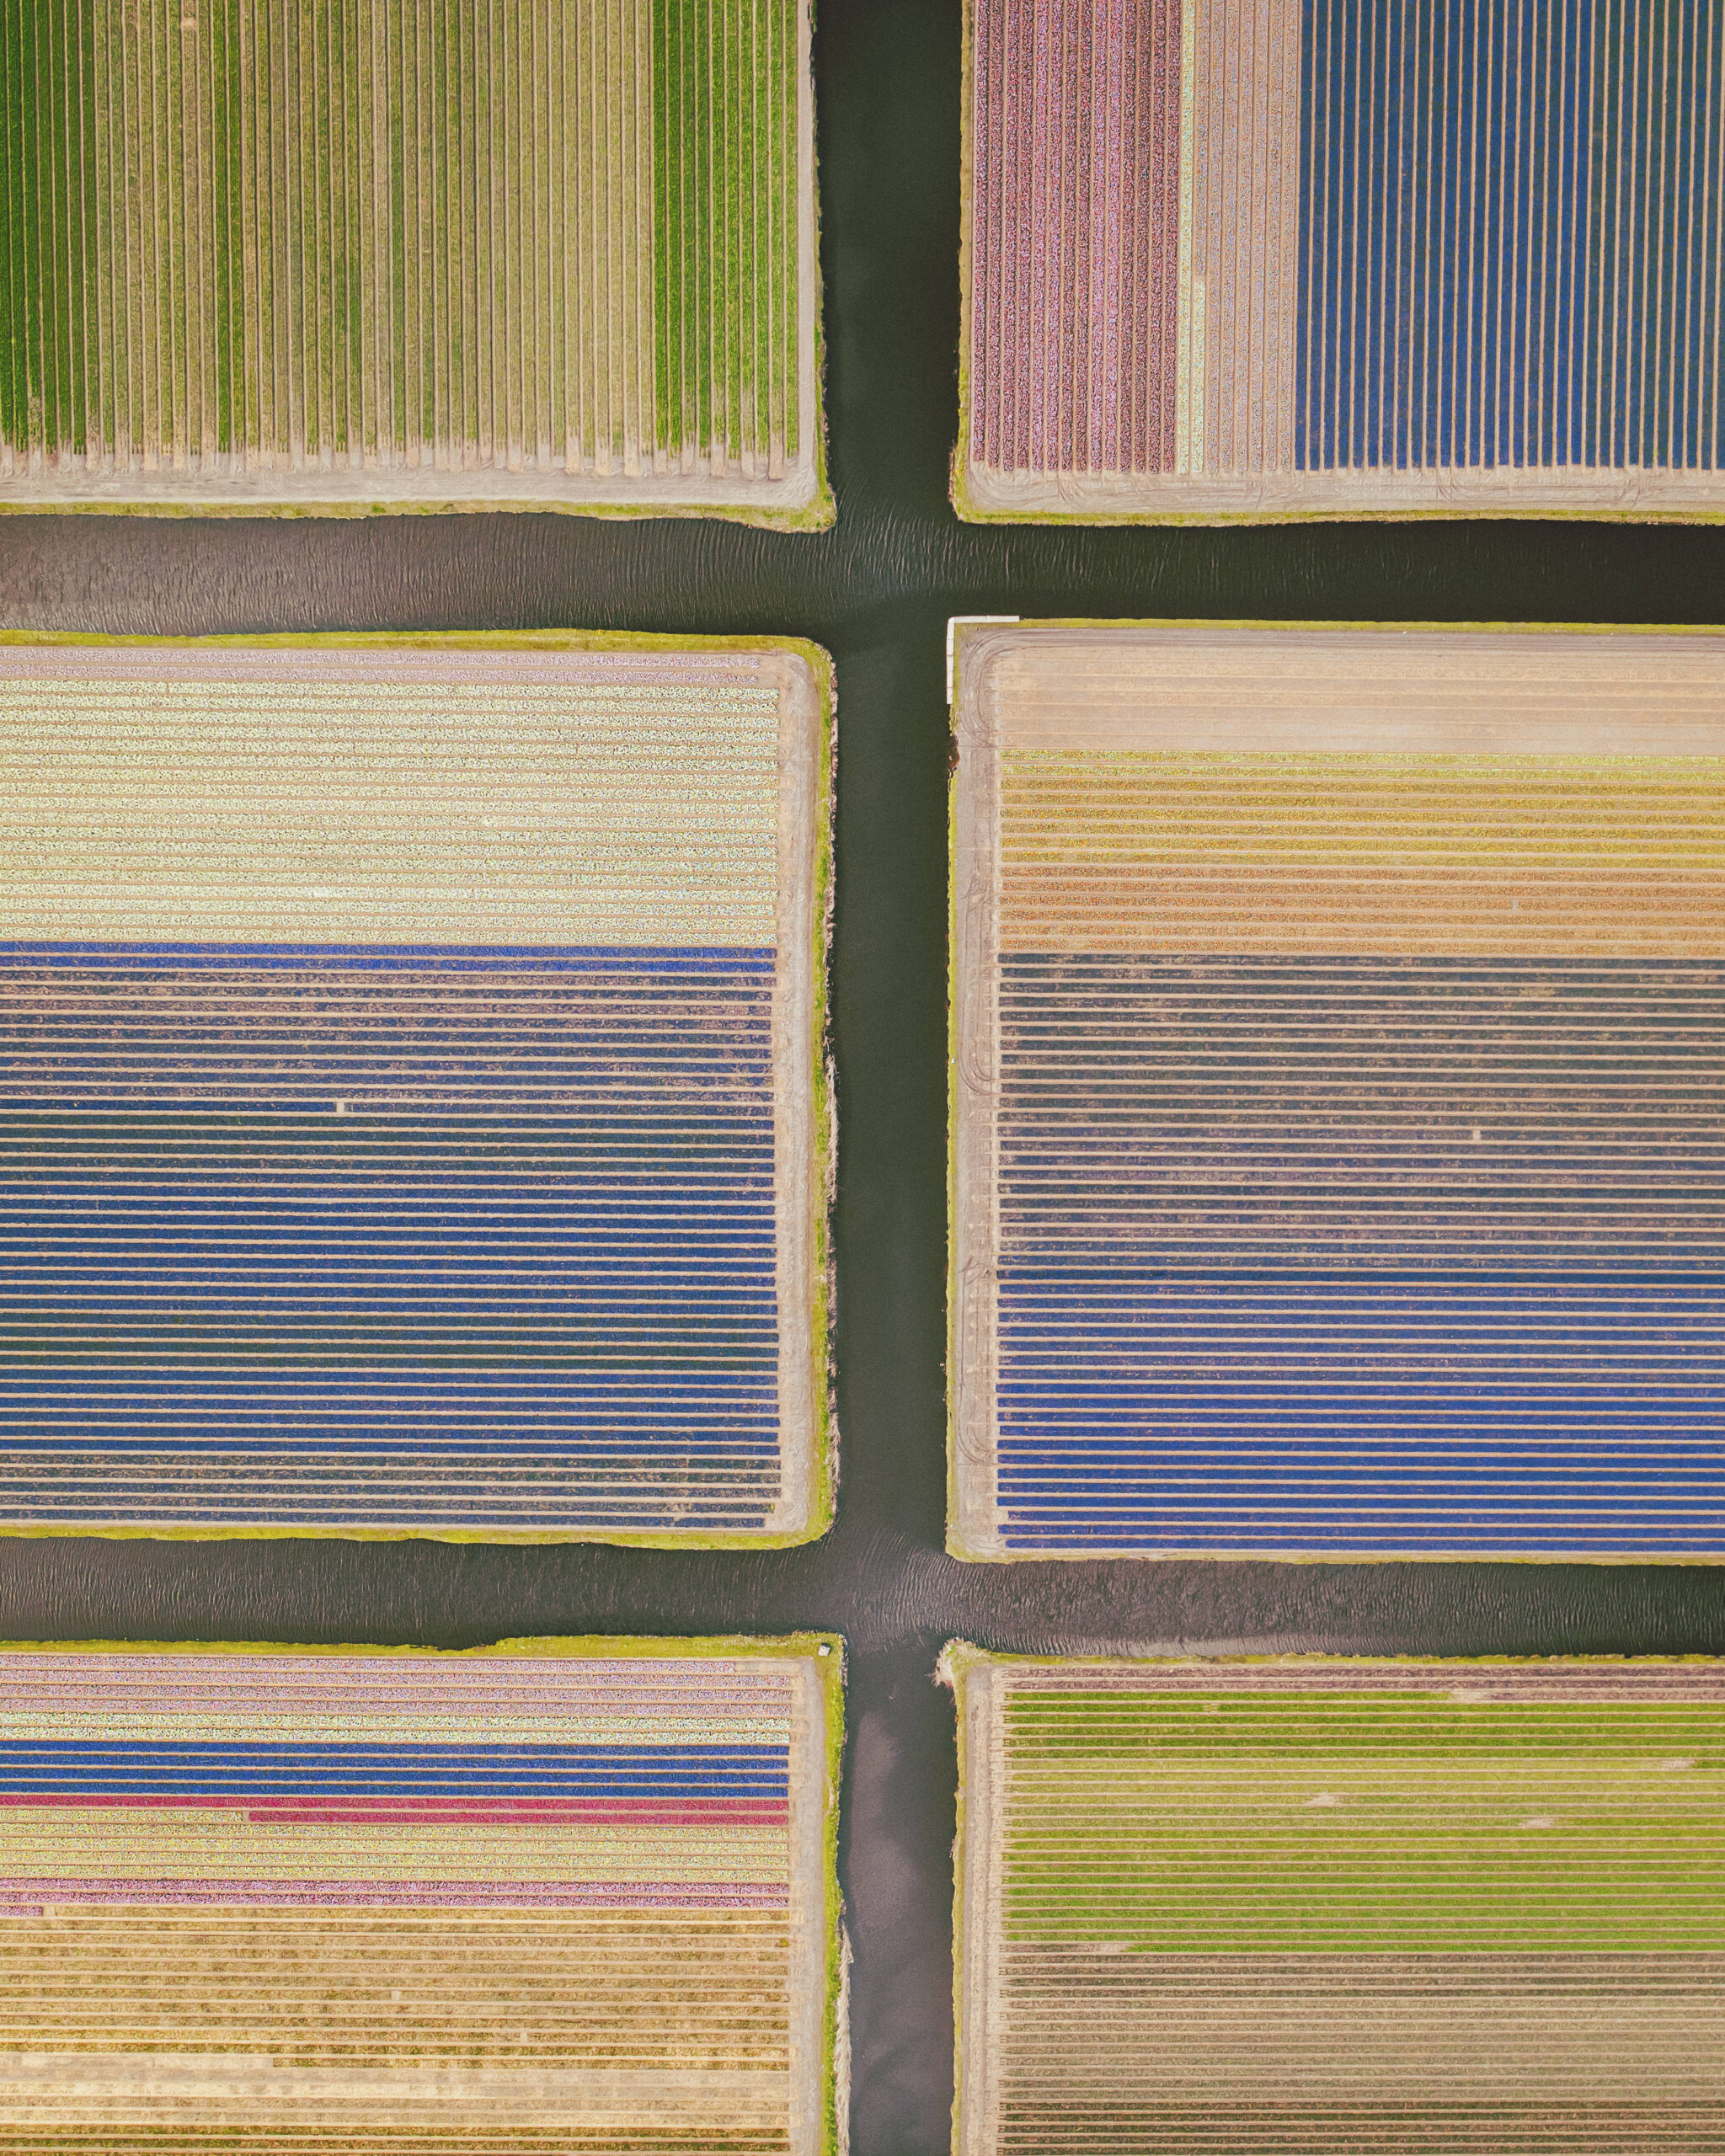 Vista aérea de un campo de tulipanes cerca de Lisse, Holanda Meridional, Países Bajos. © Dimitri Weber